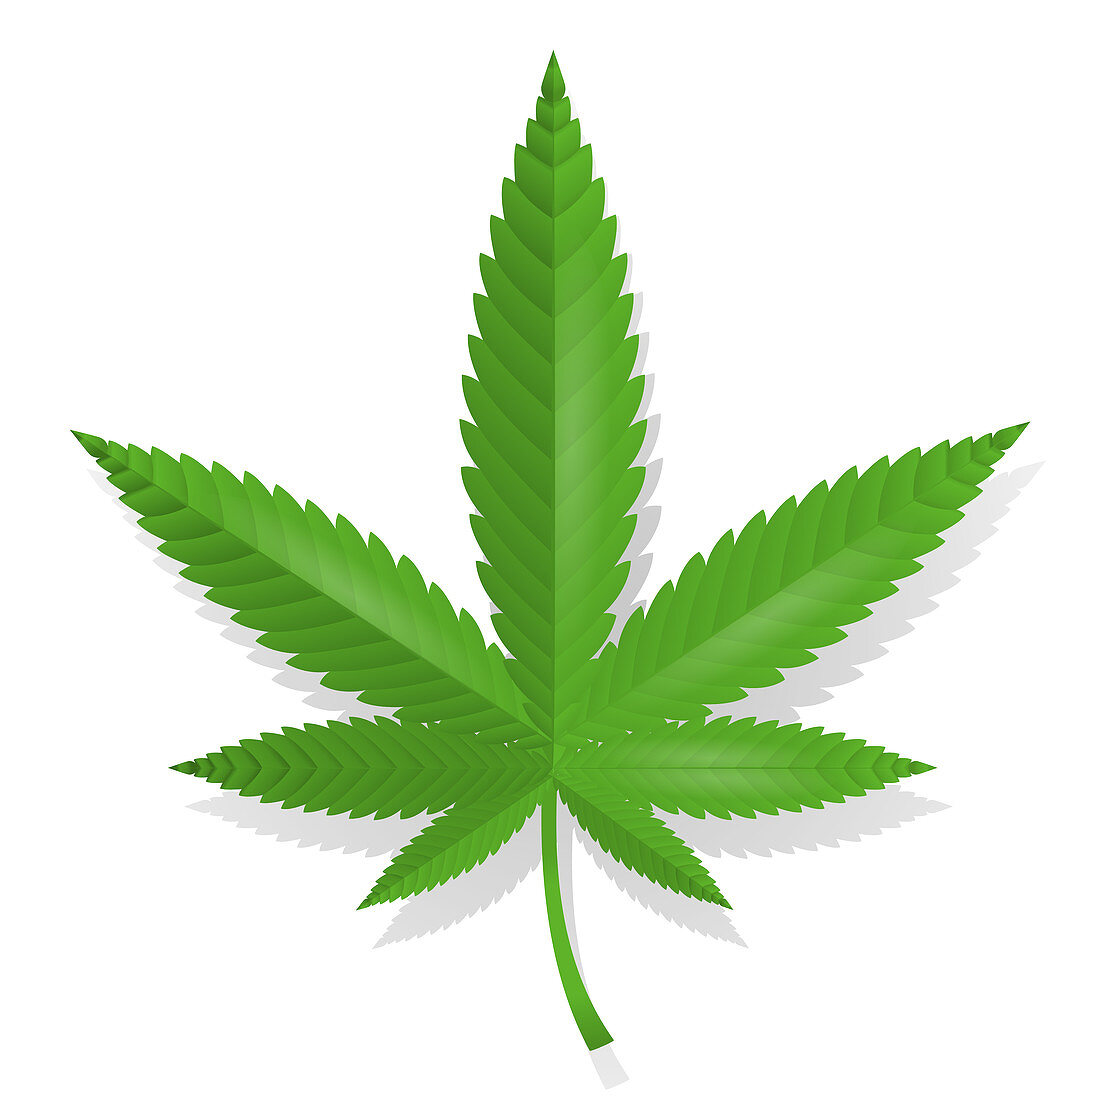 Cannabis leaf, illustration